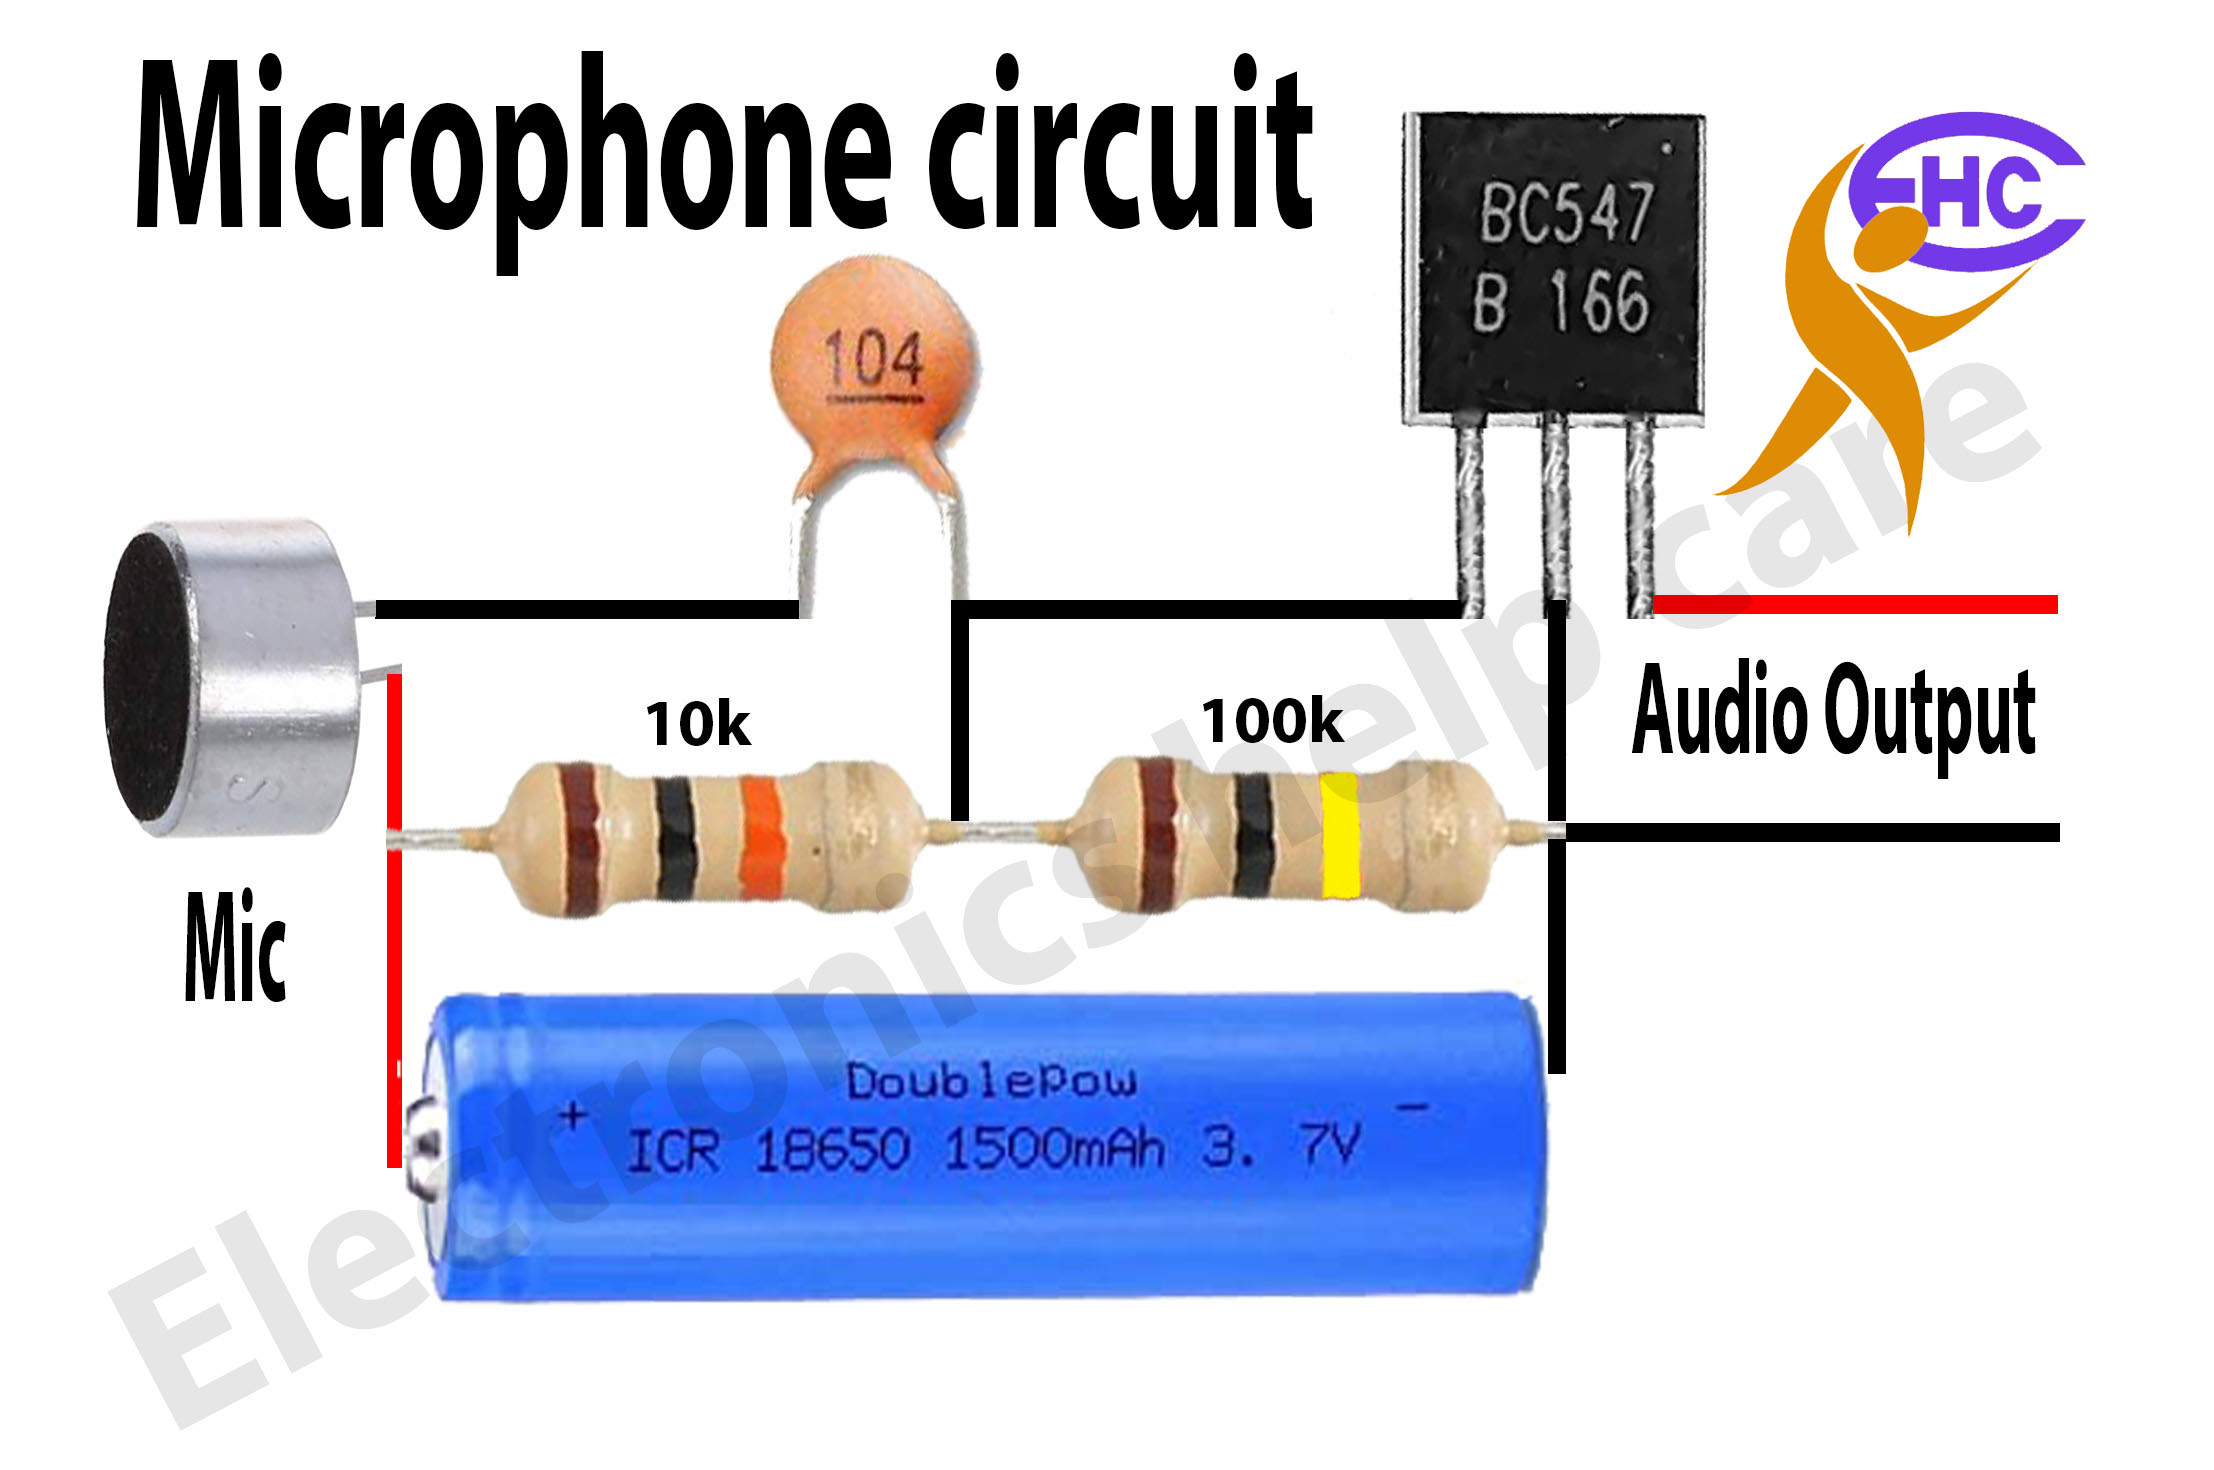 Microphone circuit diagram